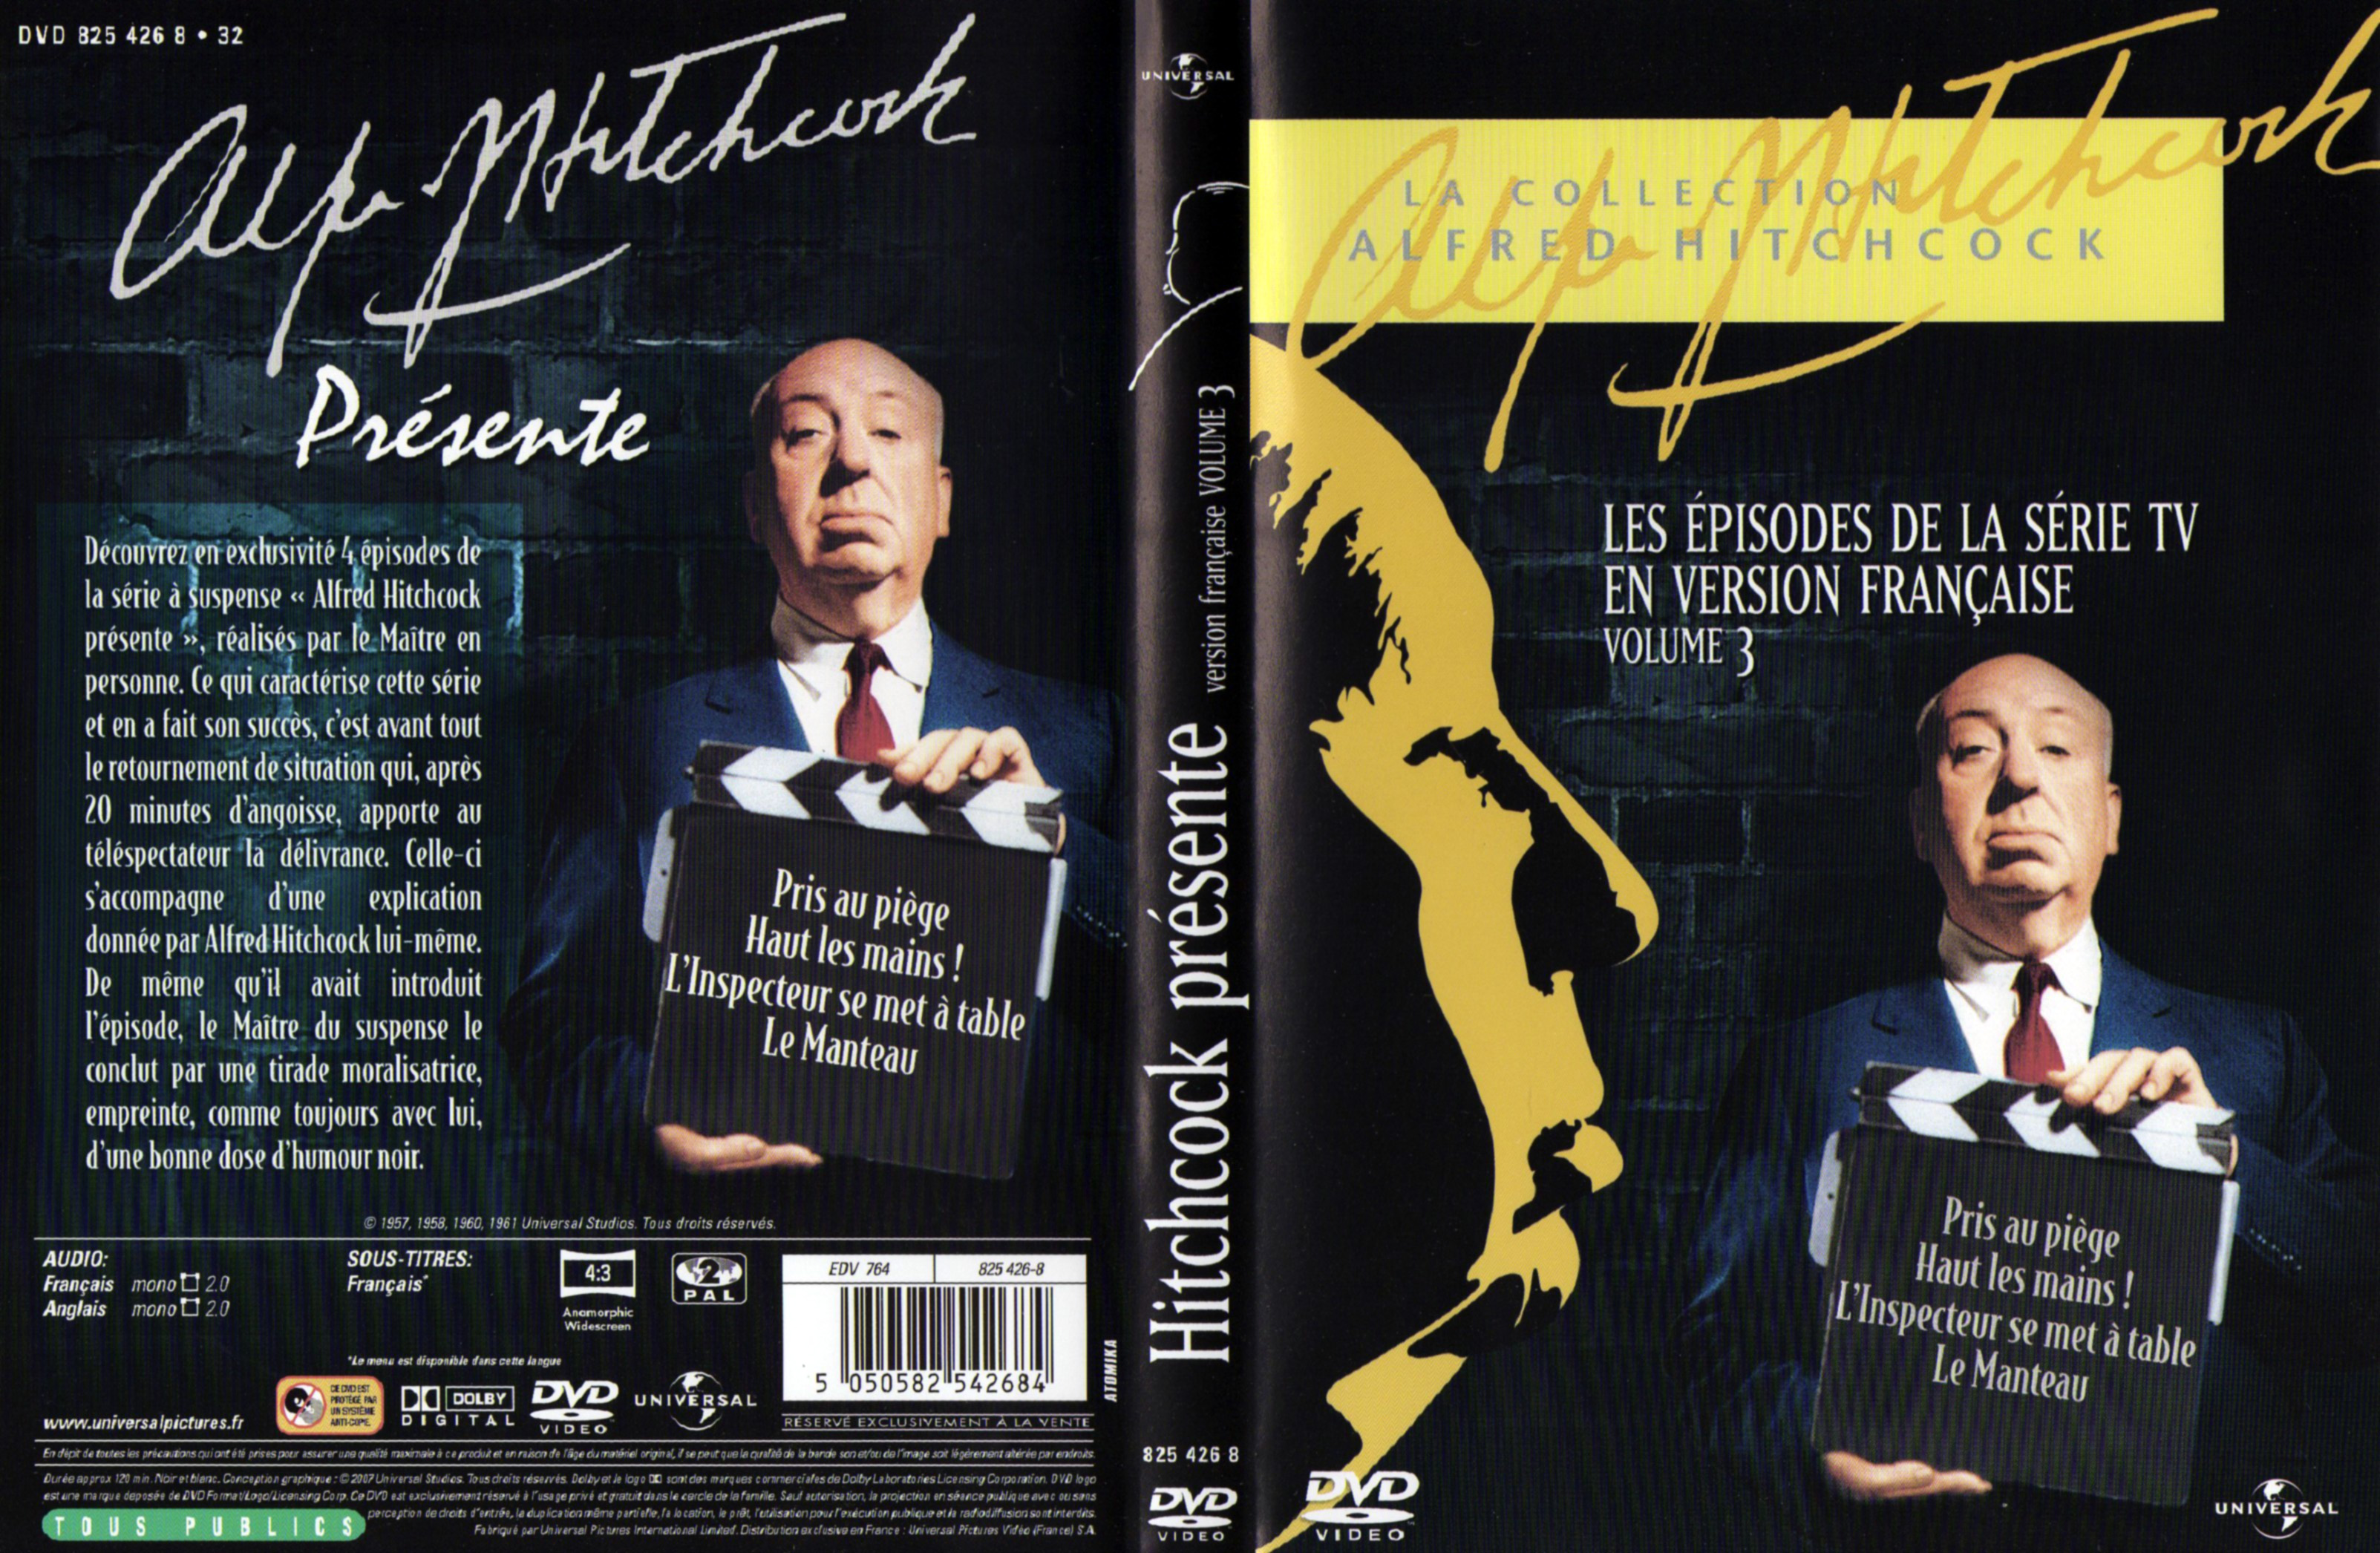 Jaquette DVD Hitchcock prsente vol 03